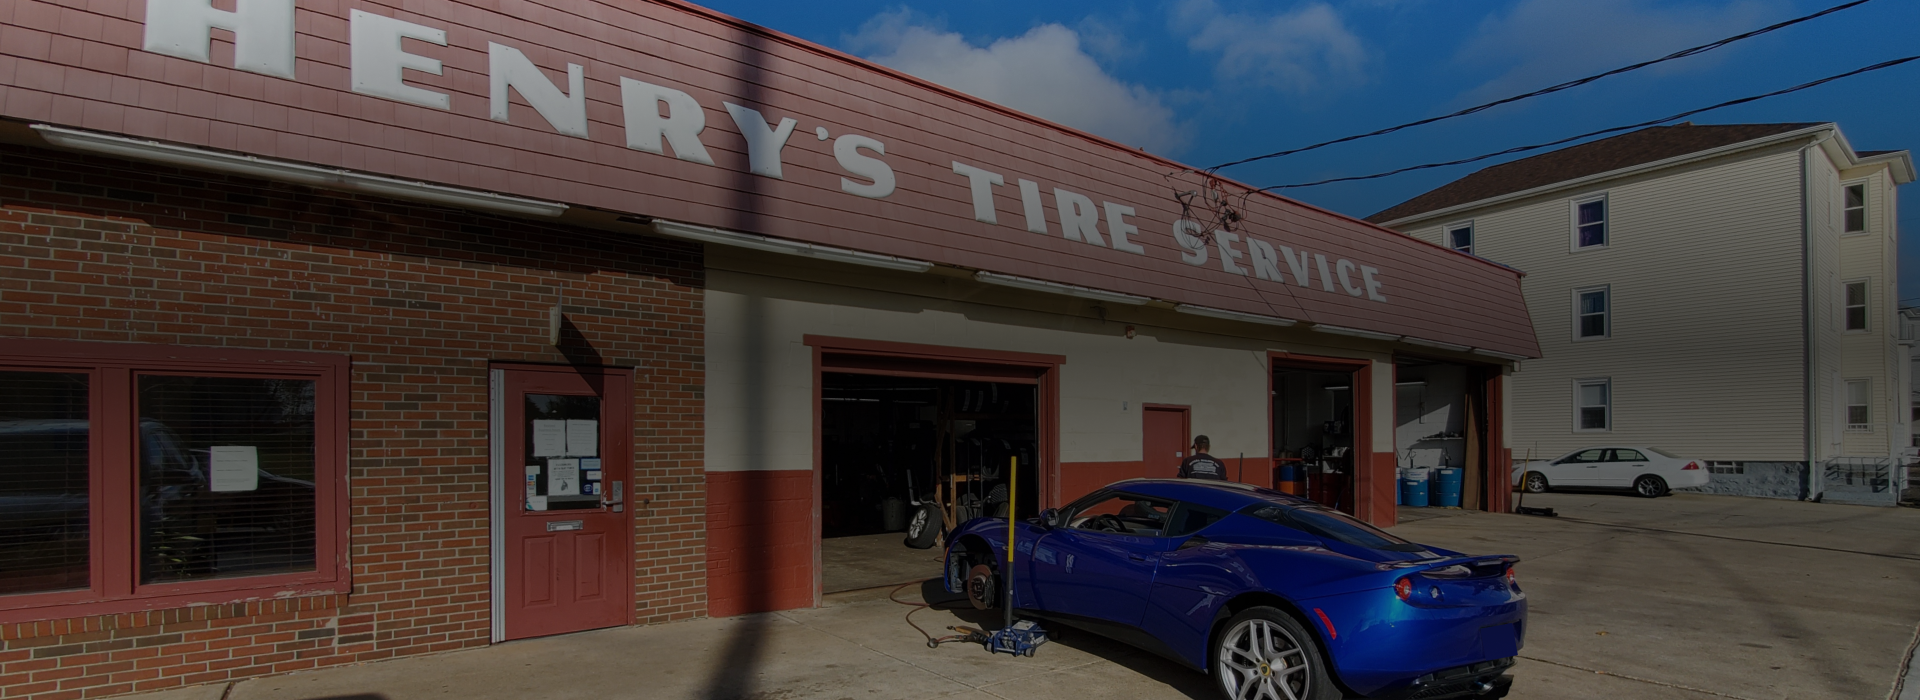 Fall River Auto Repair - Henry's Tire Service & Auto Repair